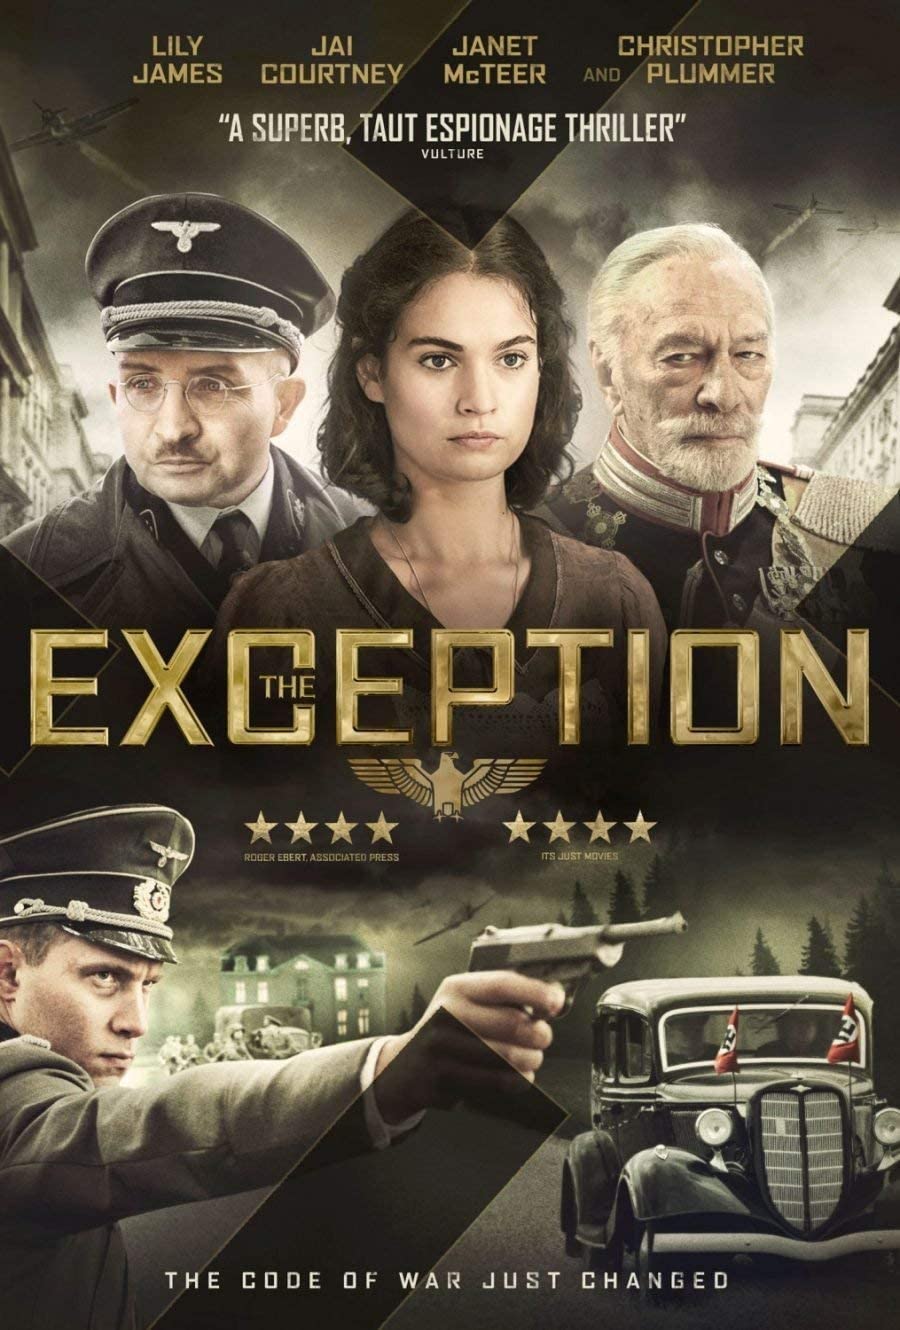 The Exception - War/Romance [DVD]